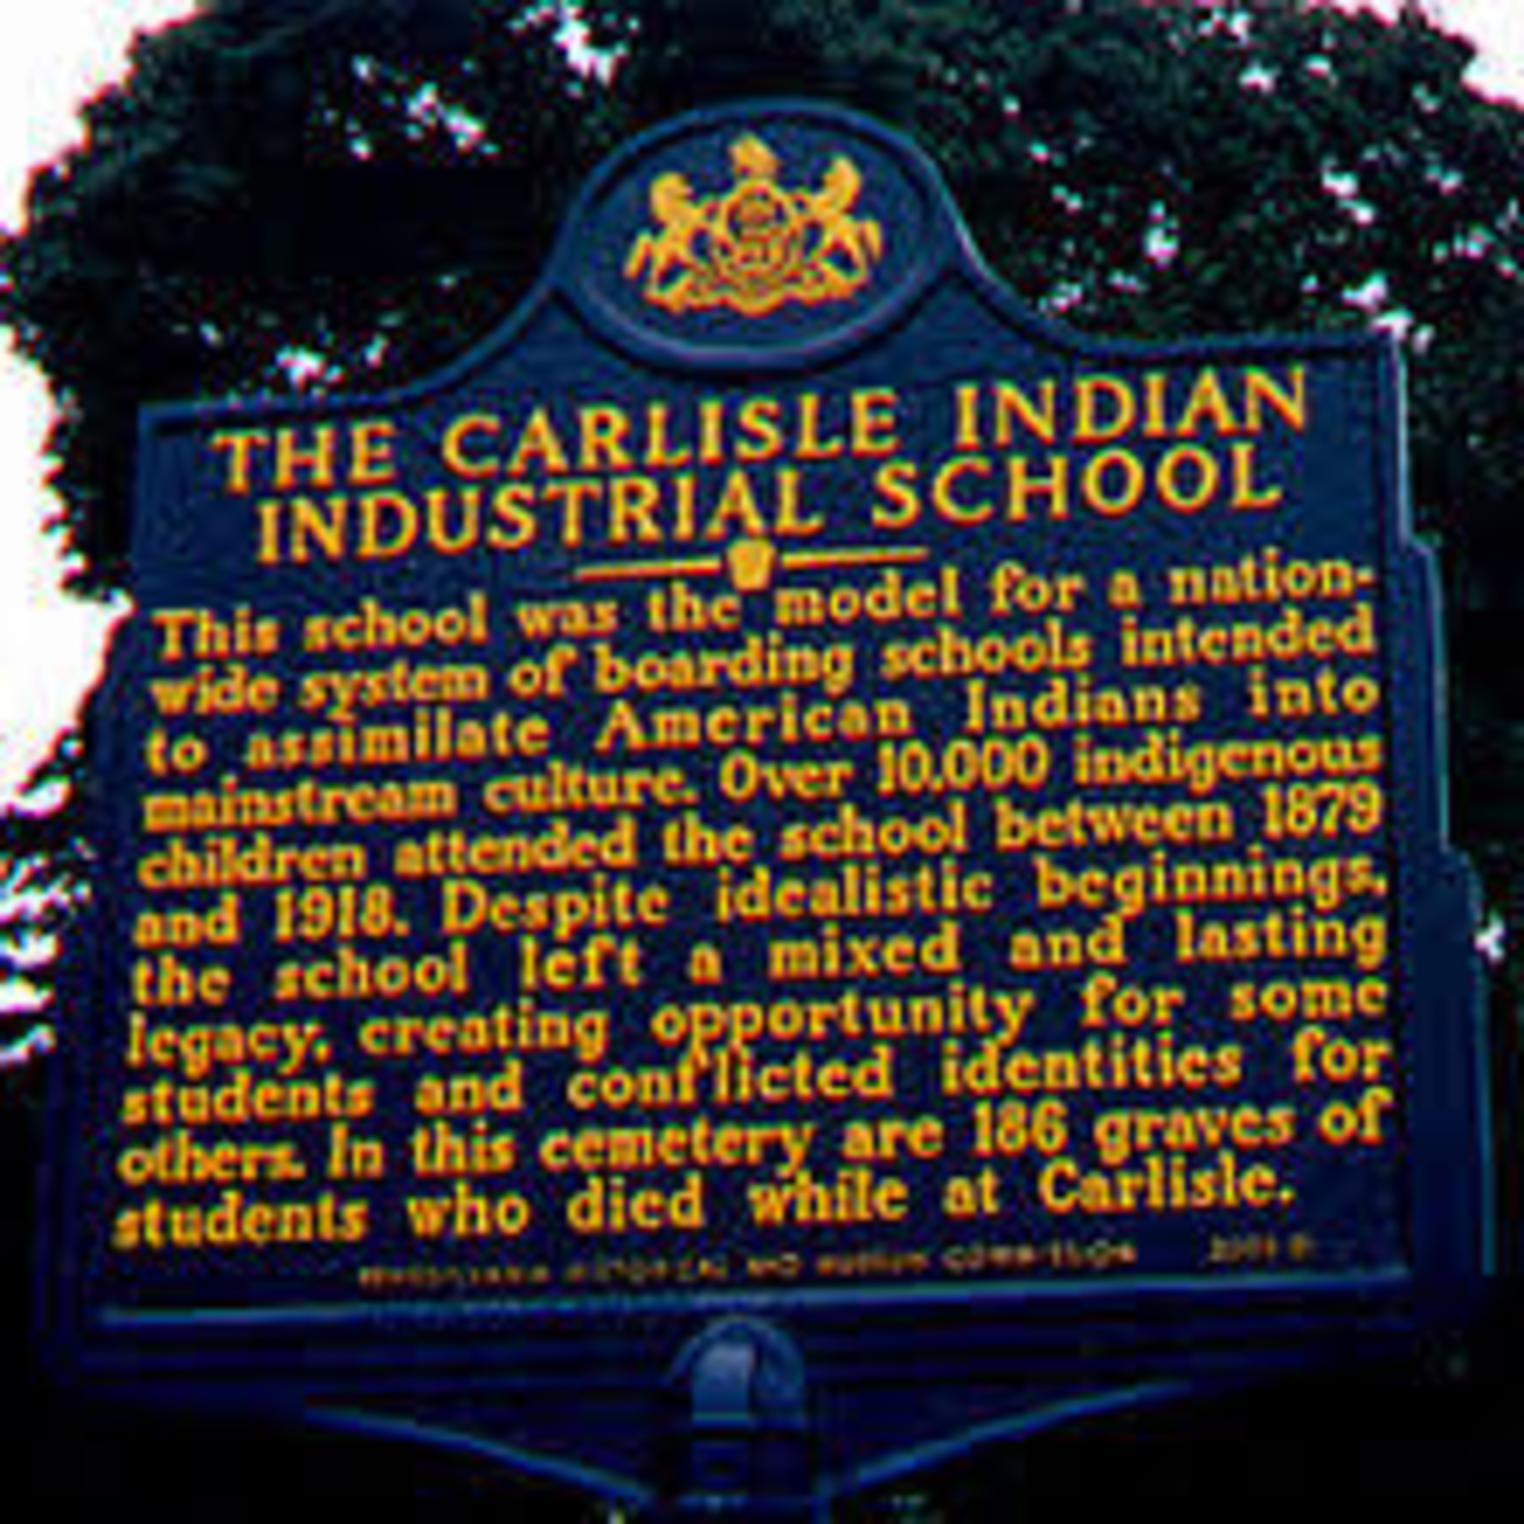 Carlisle Indian Industrial School